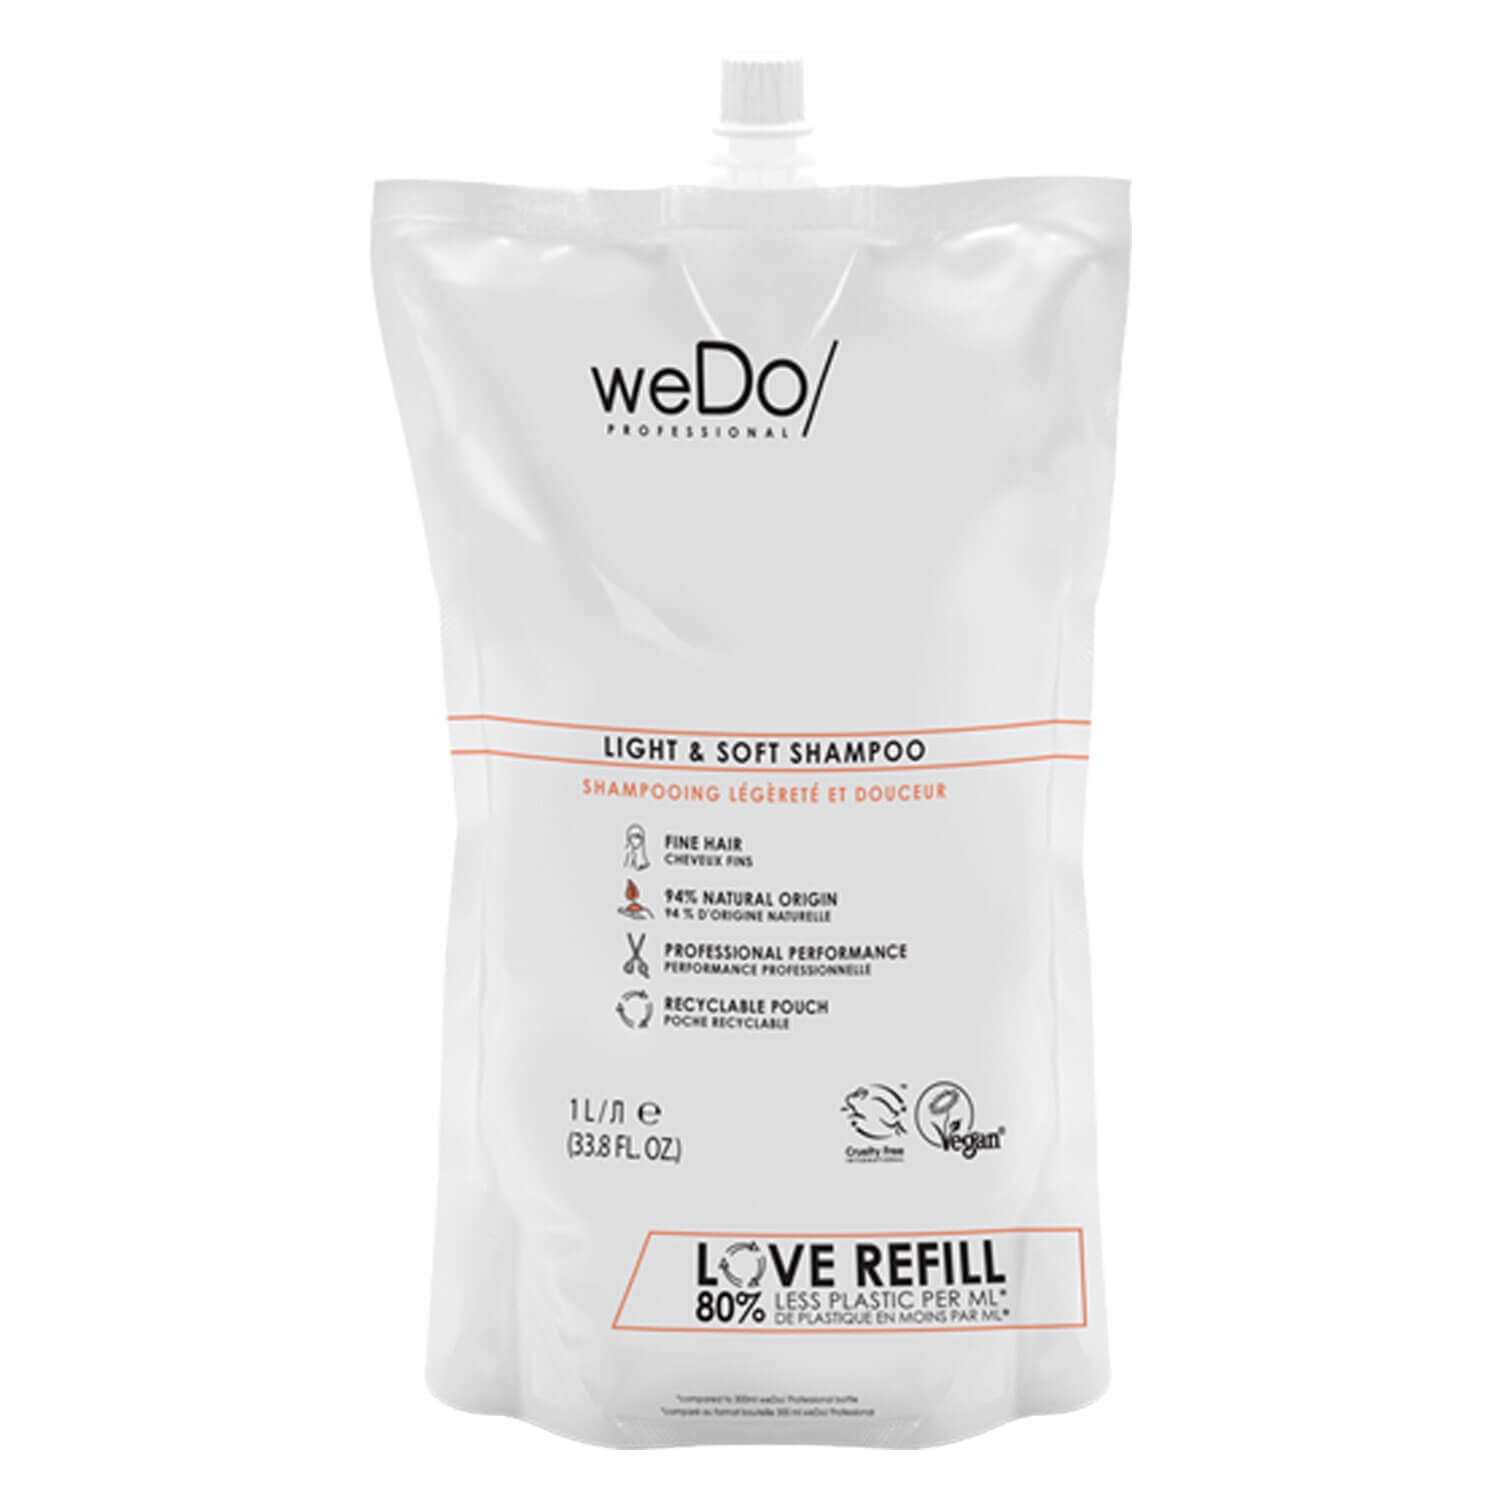 Product image from weDo/ - Light & Soft Shampoo Refill